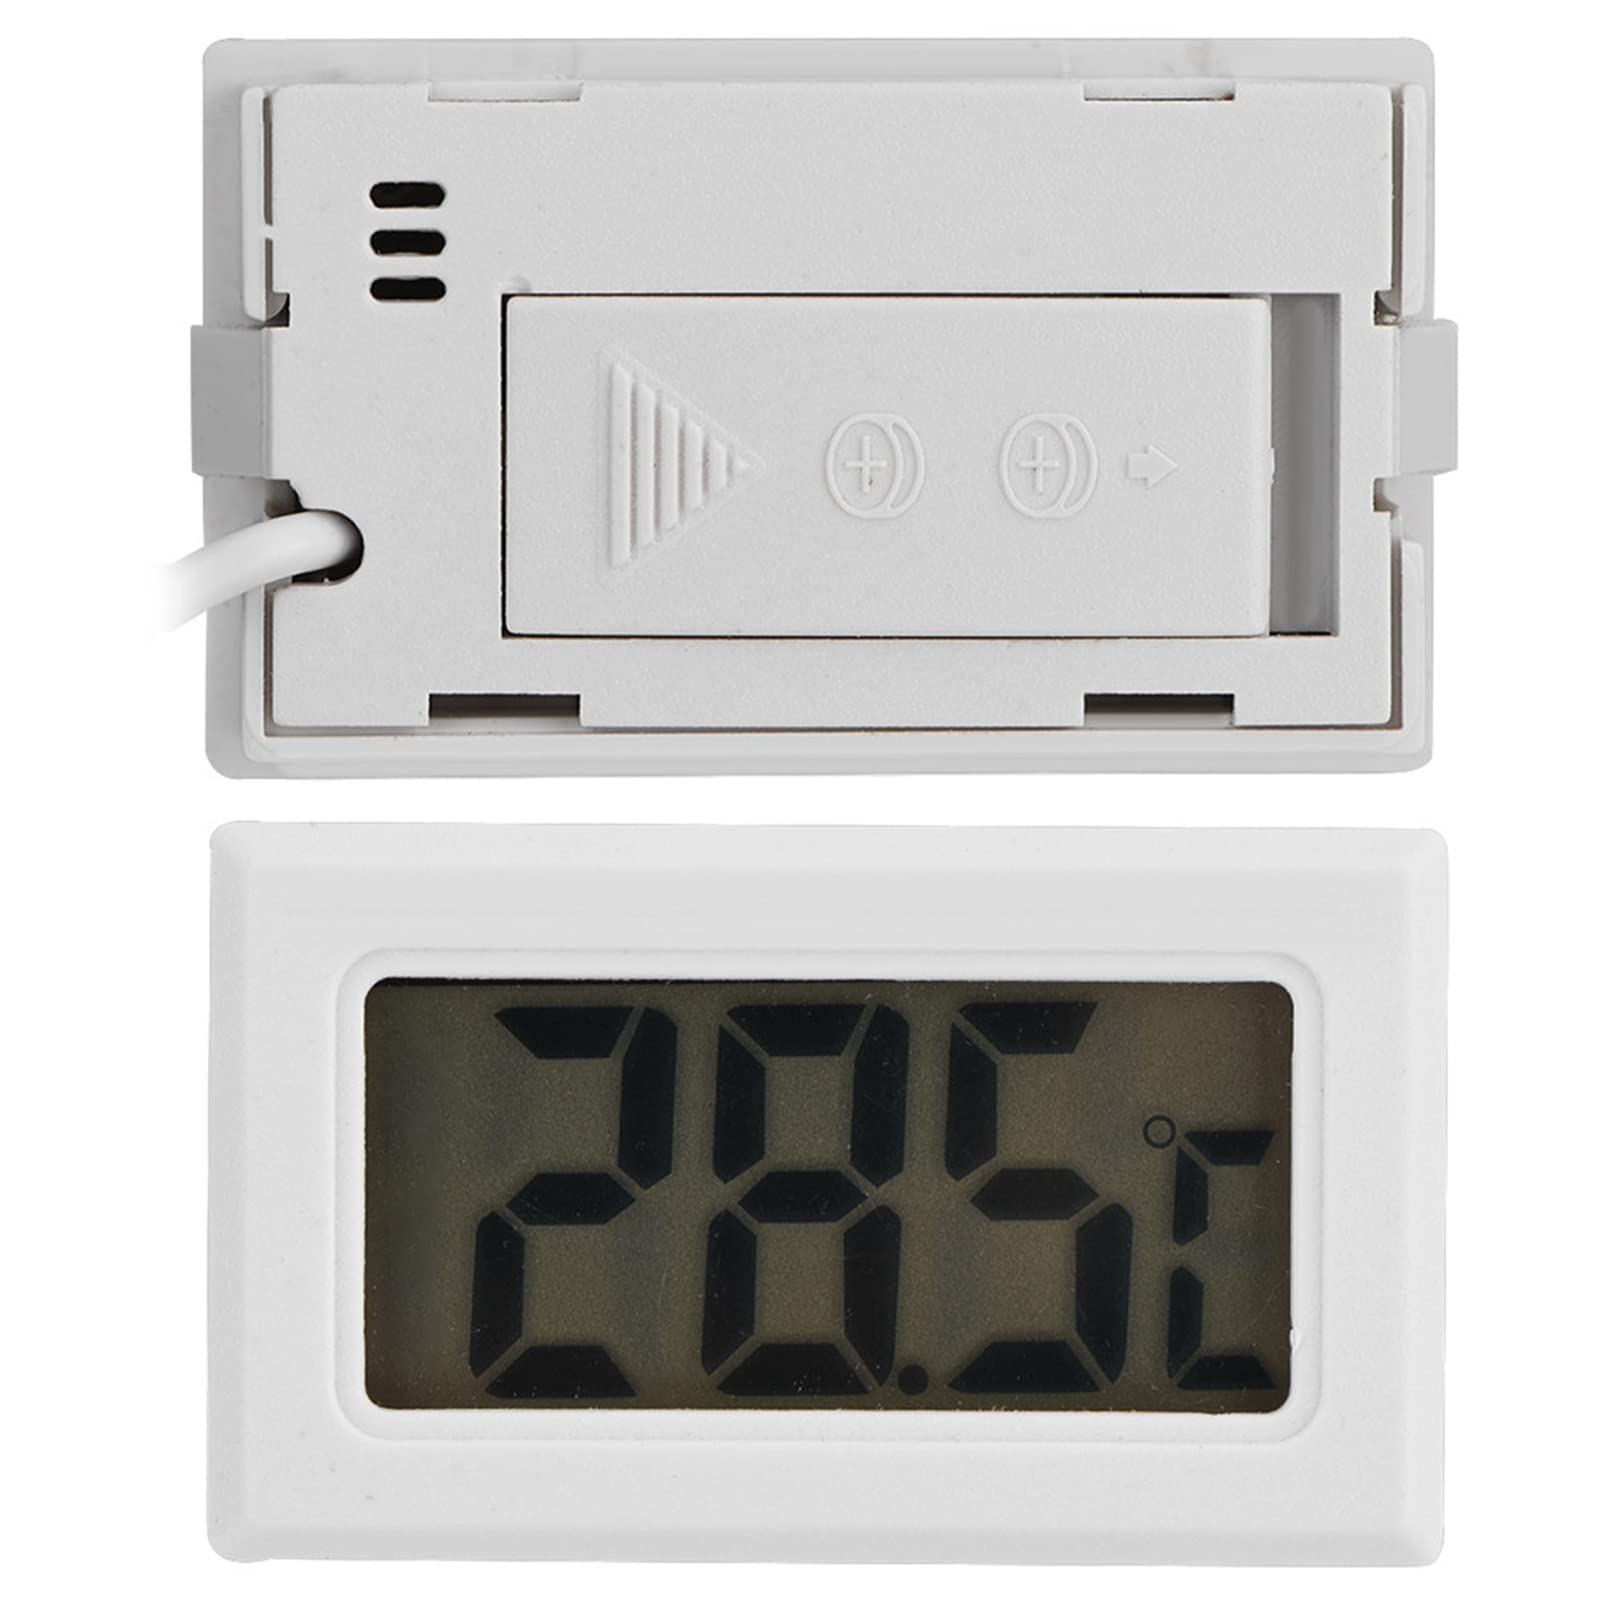 Refrigerator Fridge Thermometer, Mini LED Display Digital Temperature Meter Probe Sensor Digital LCD Thermometer